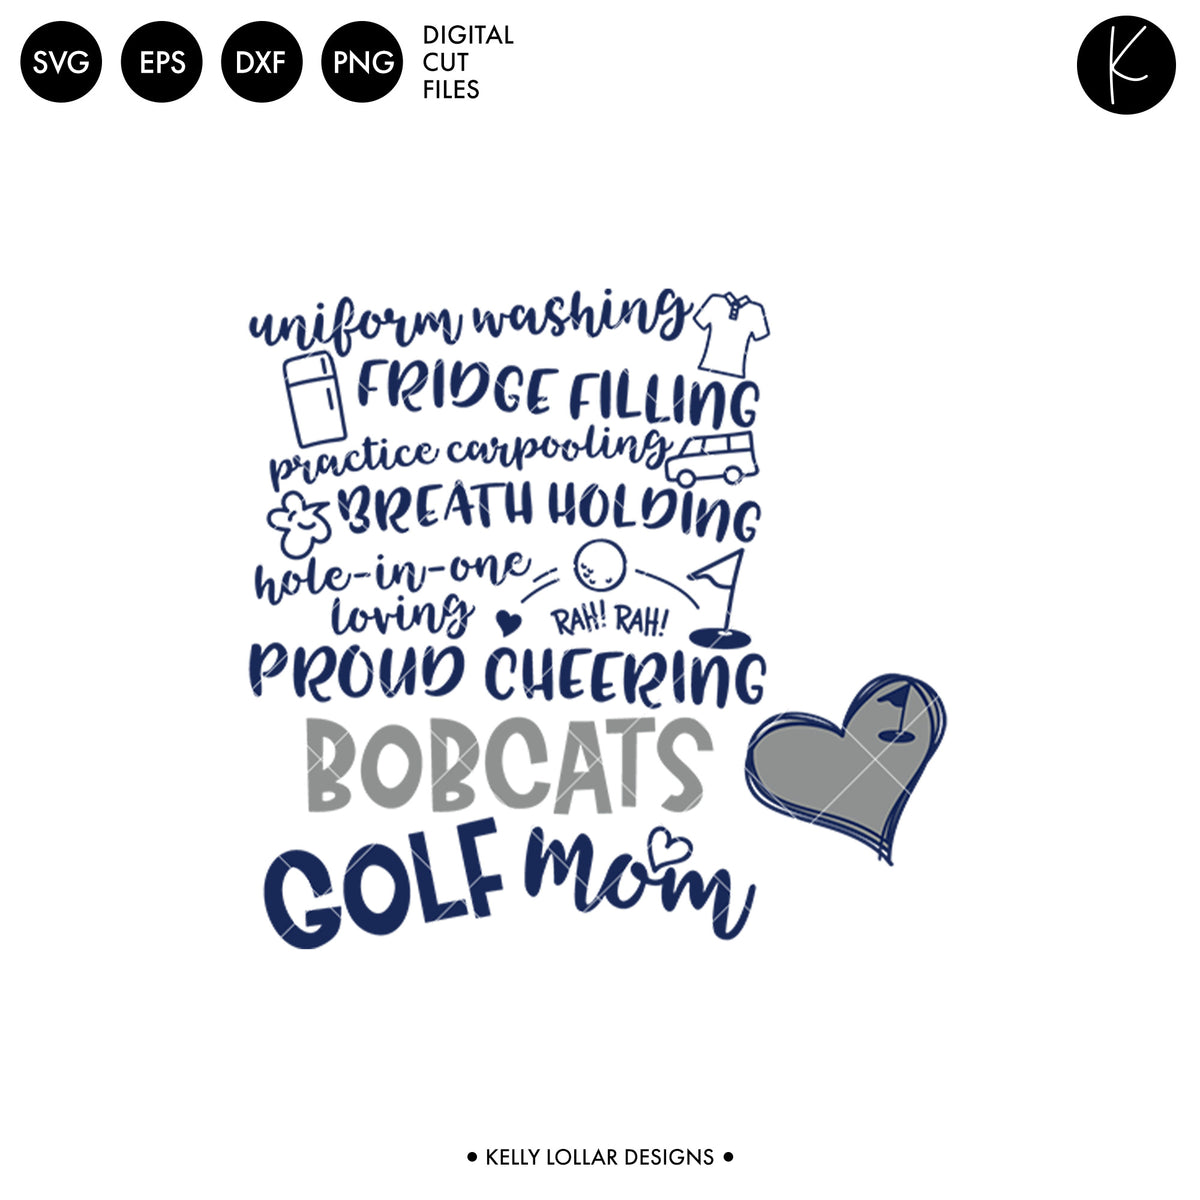 Bobcats Golf Bundle | SVG DXF EPS PNG Cut Files